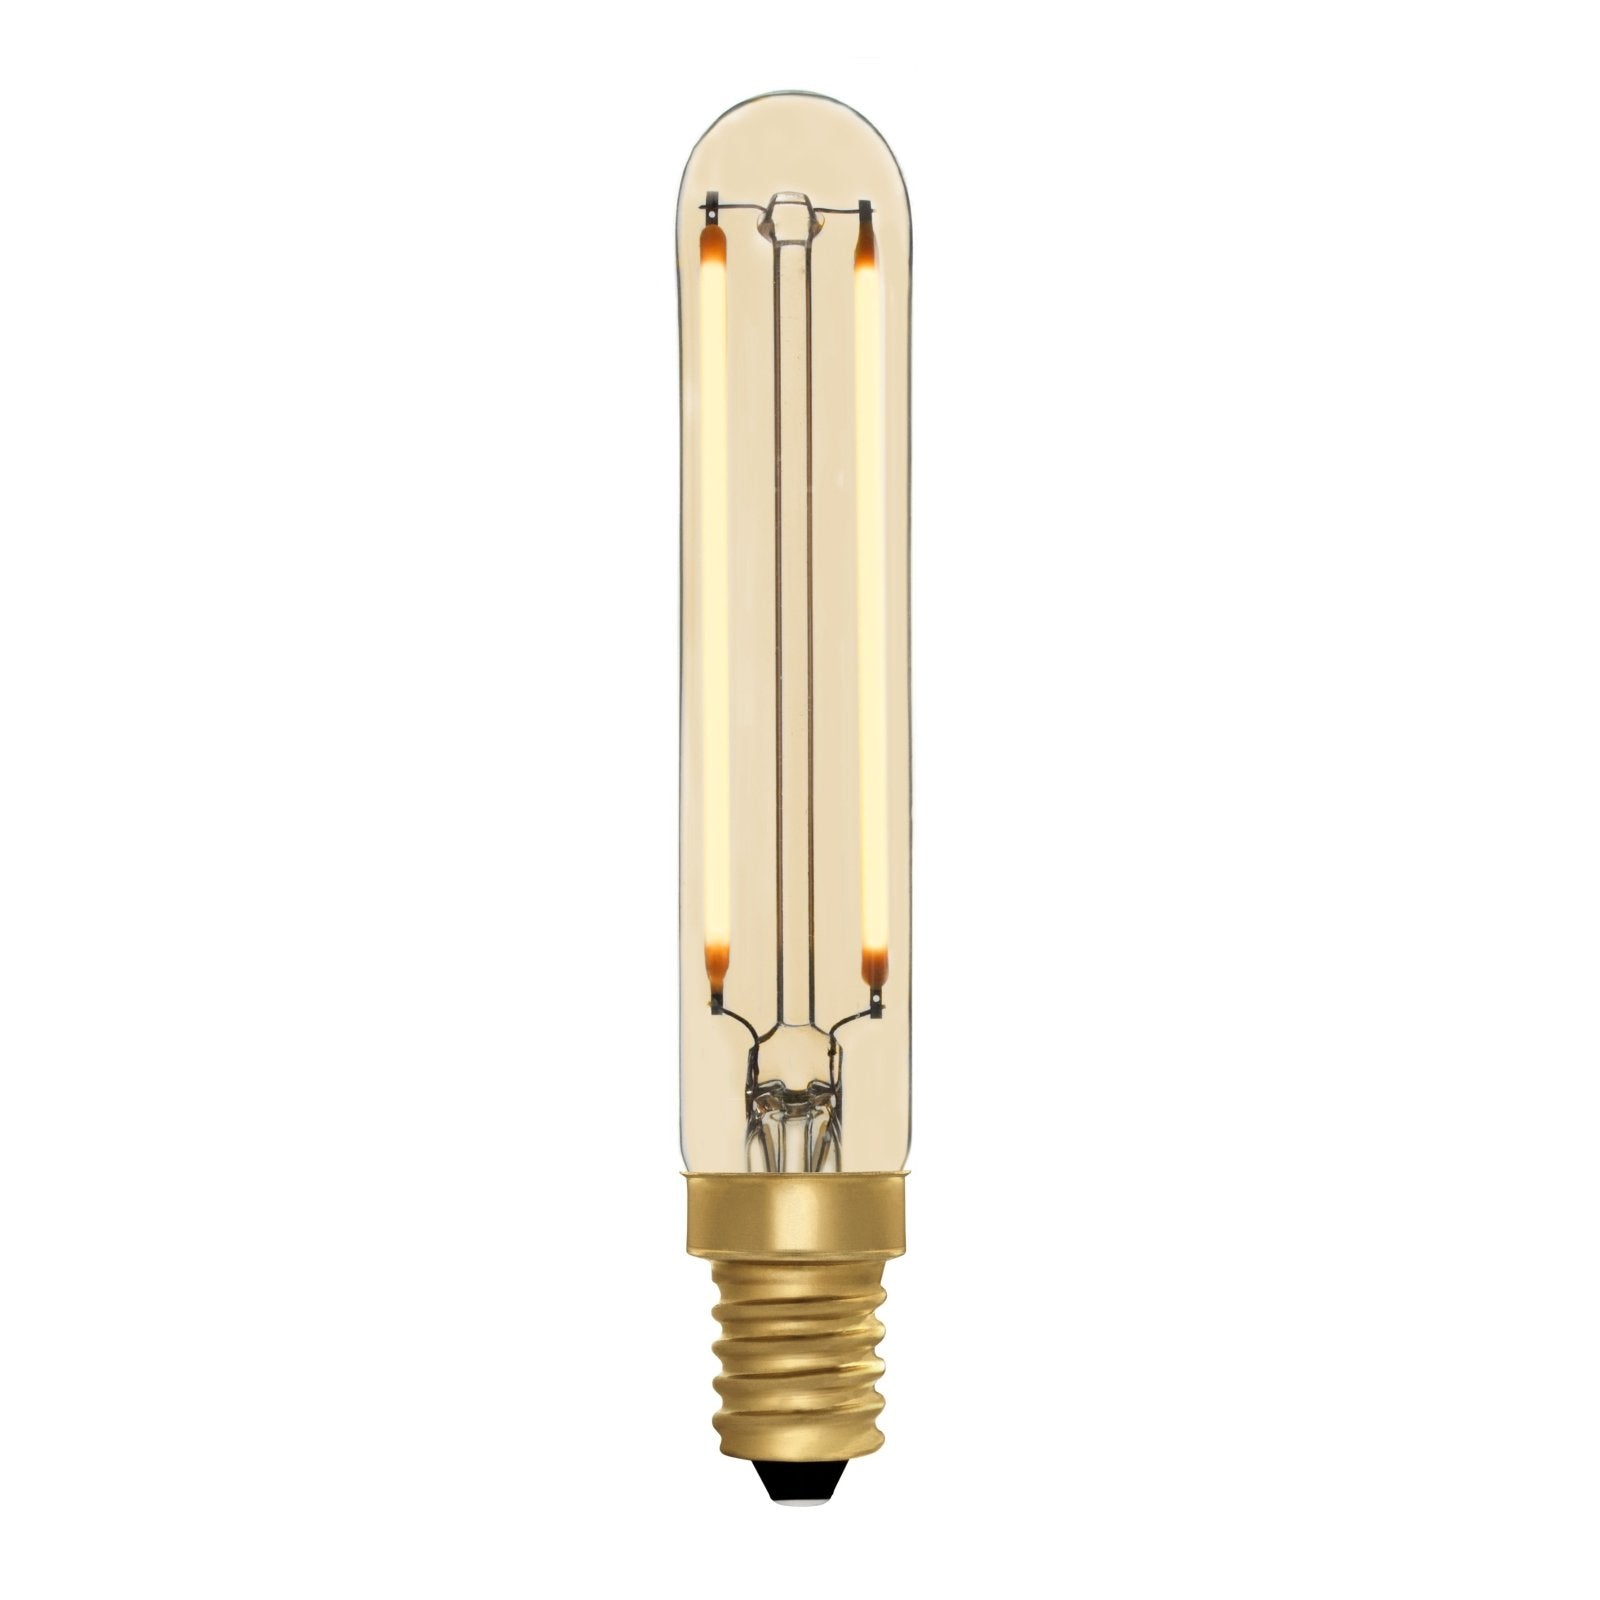 Tube T20 115mm Amber 2.7W E14 2200K - LED Lamp from RETROLIGHT. Made by Zico Lighting.